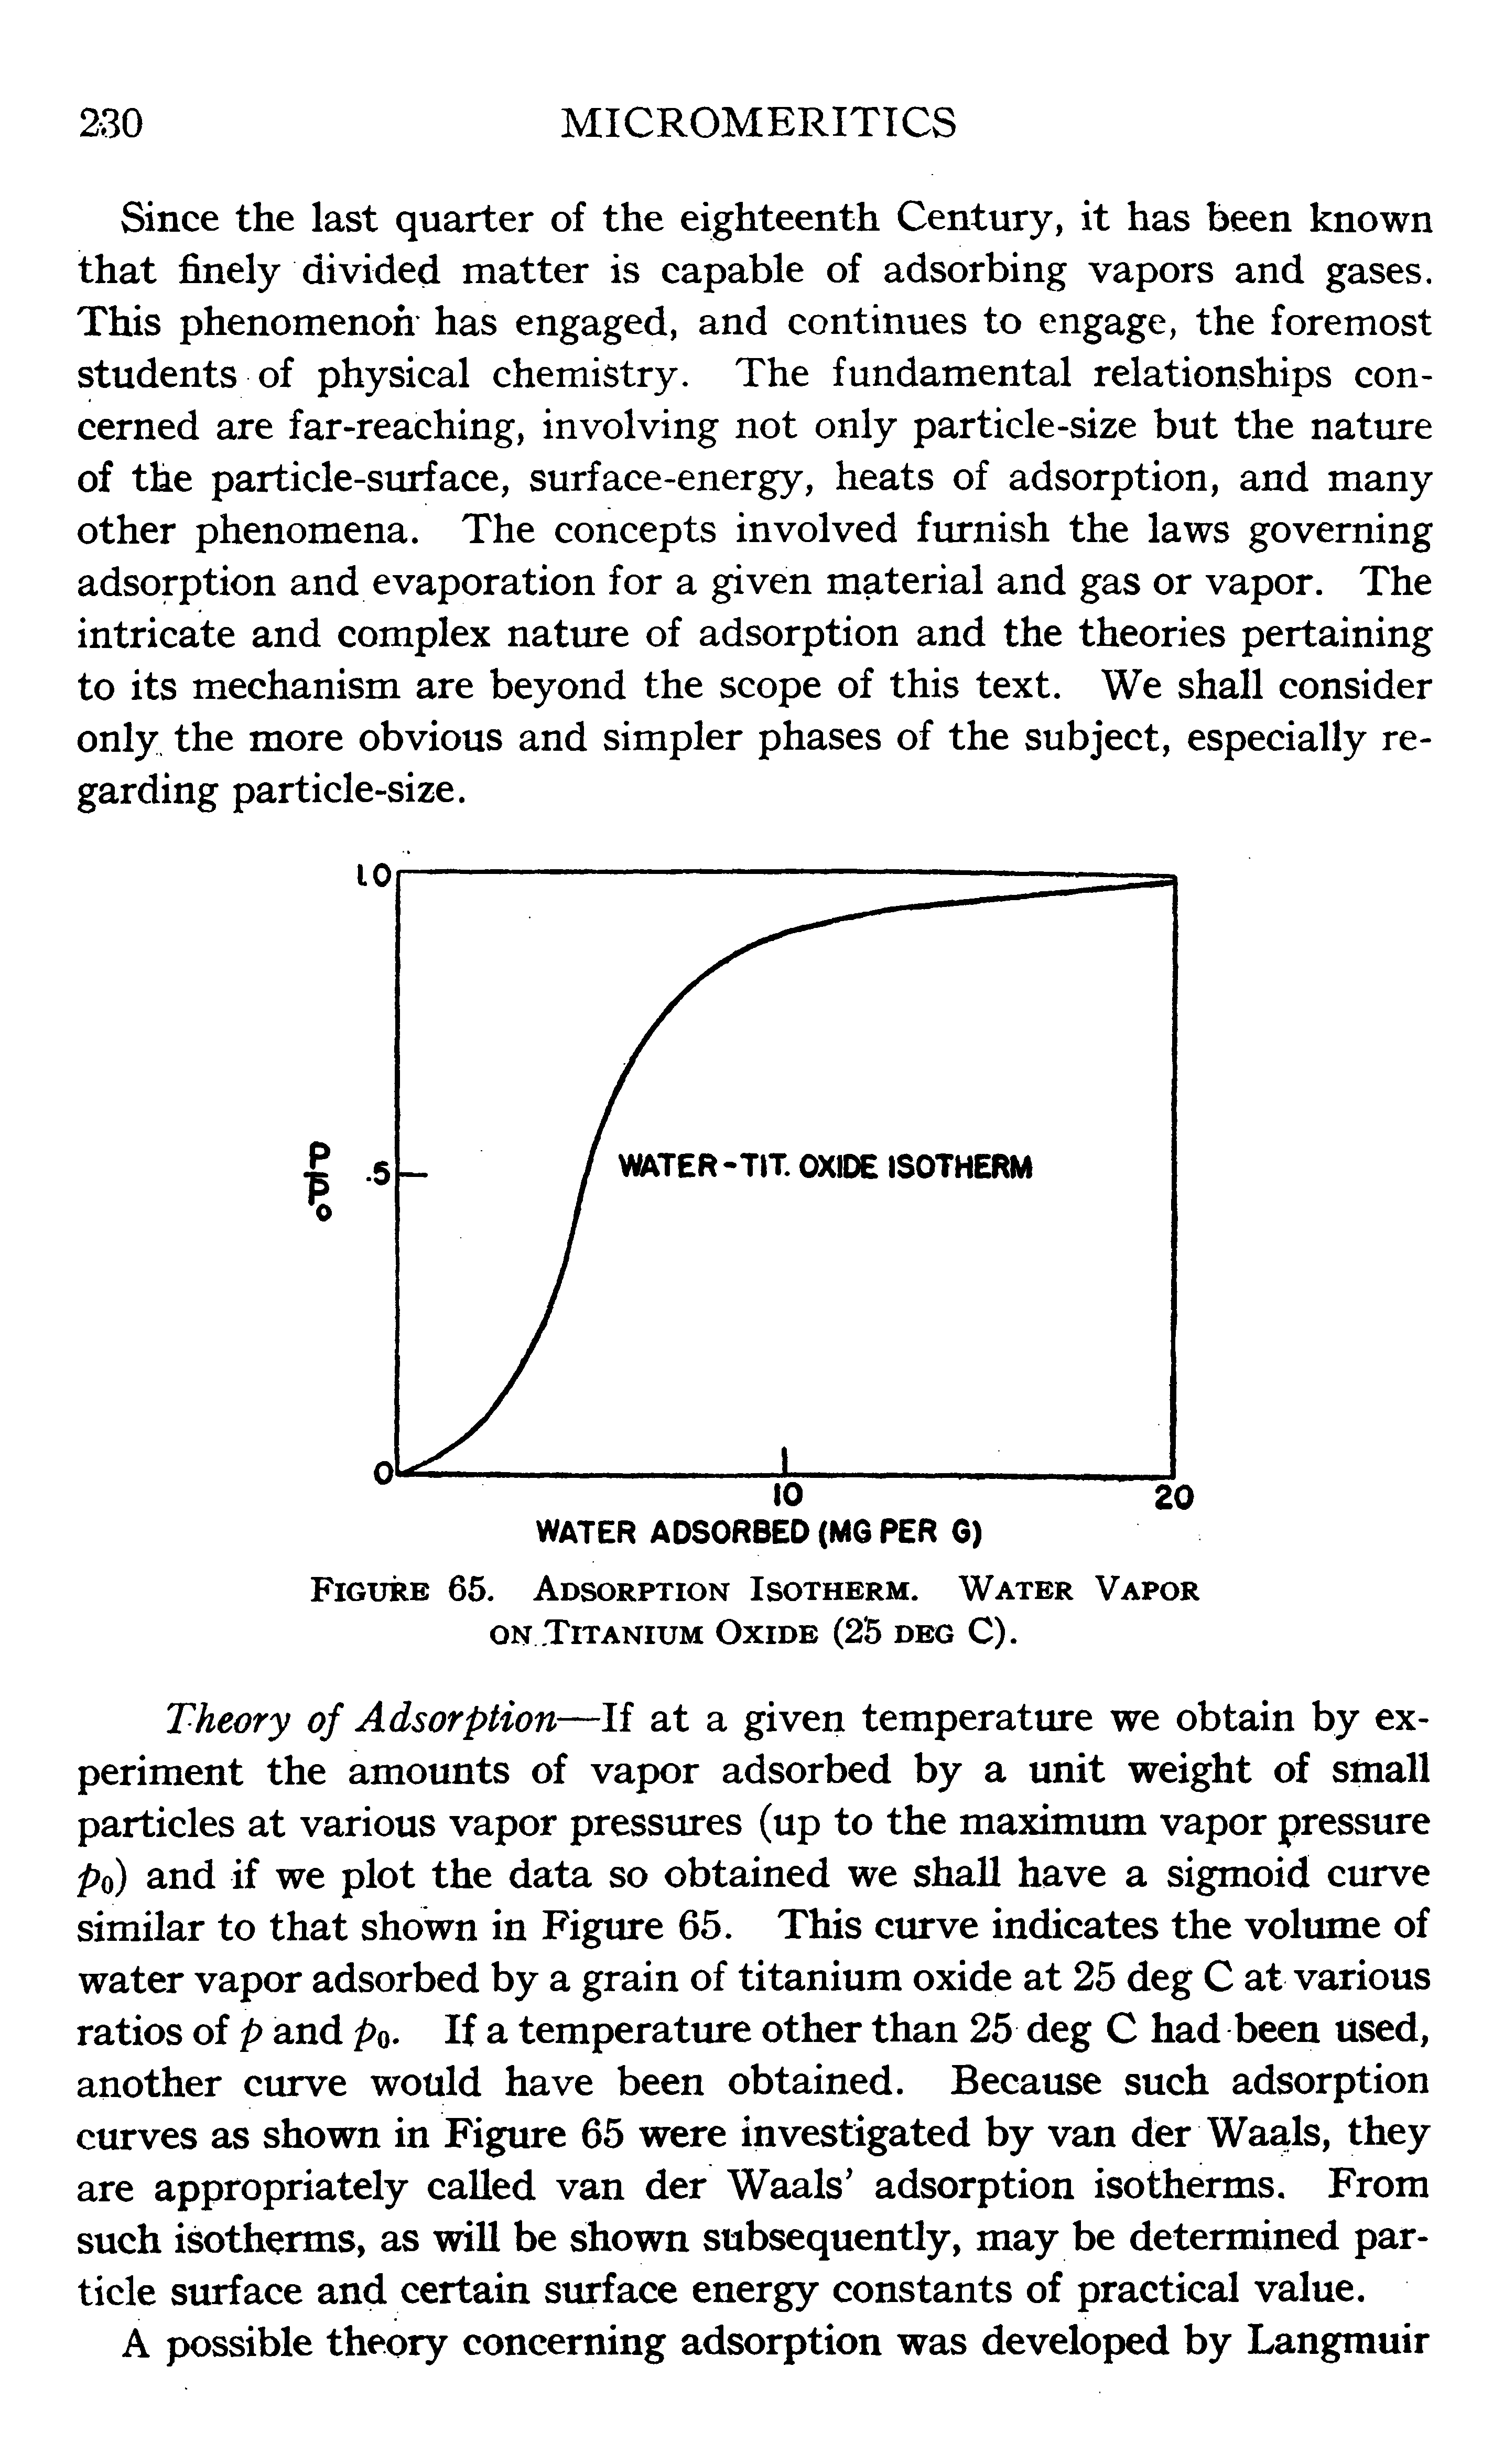 Figure 65. Adsorption Isotherm. Water Vapor on Titanium Oxide (25 deg C).